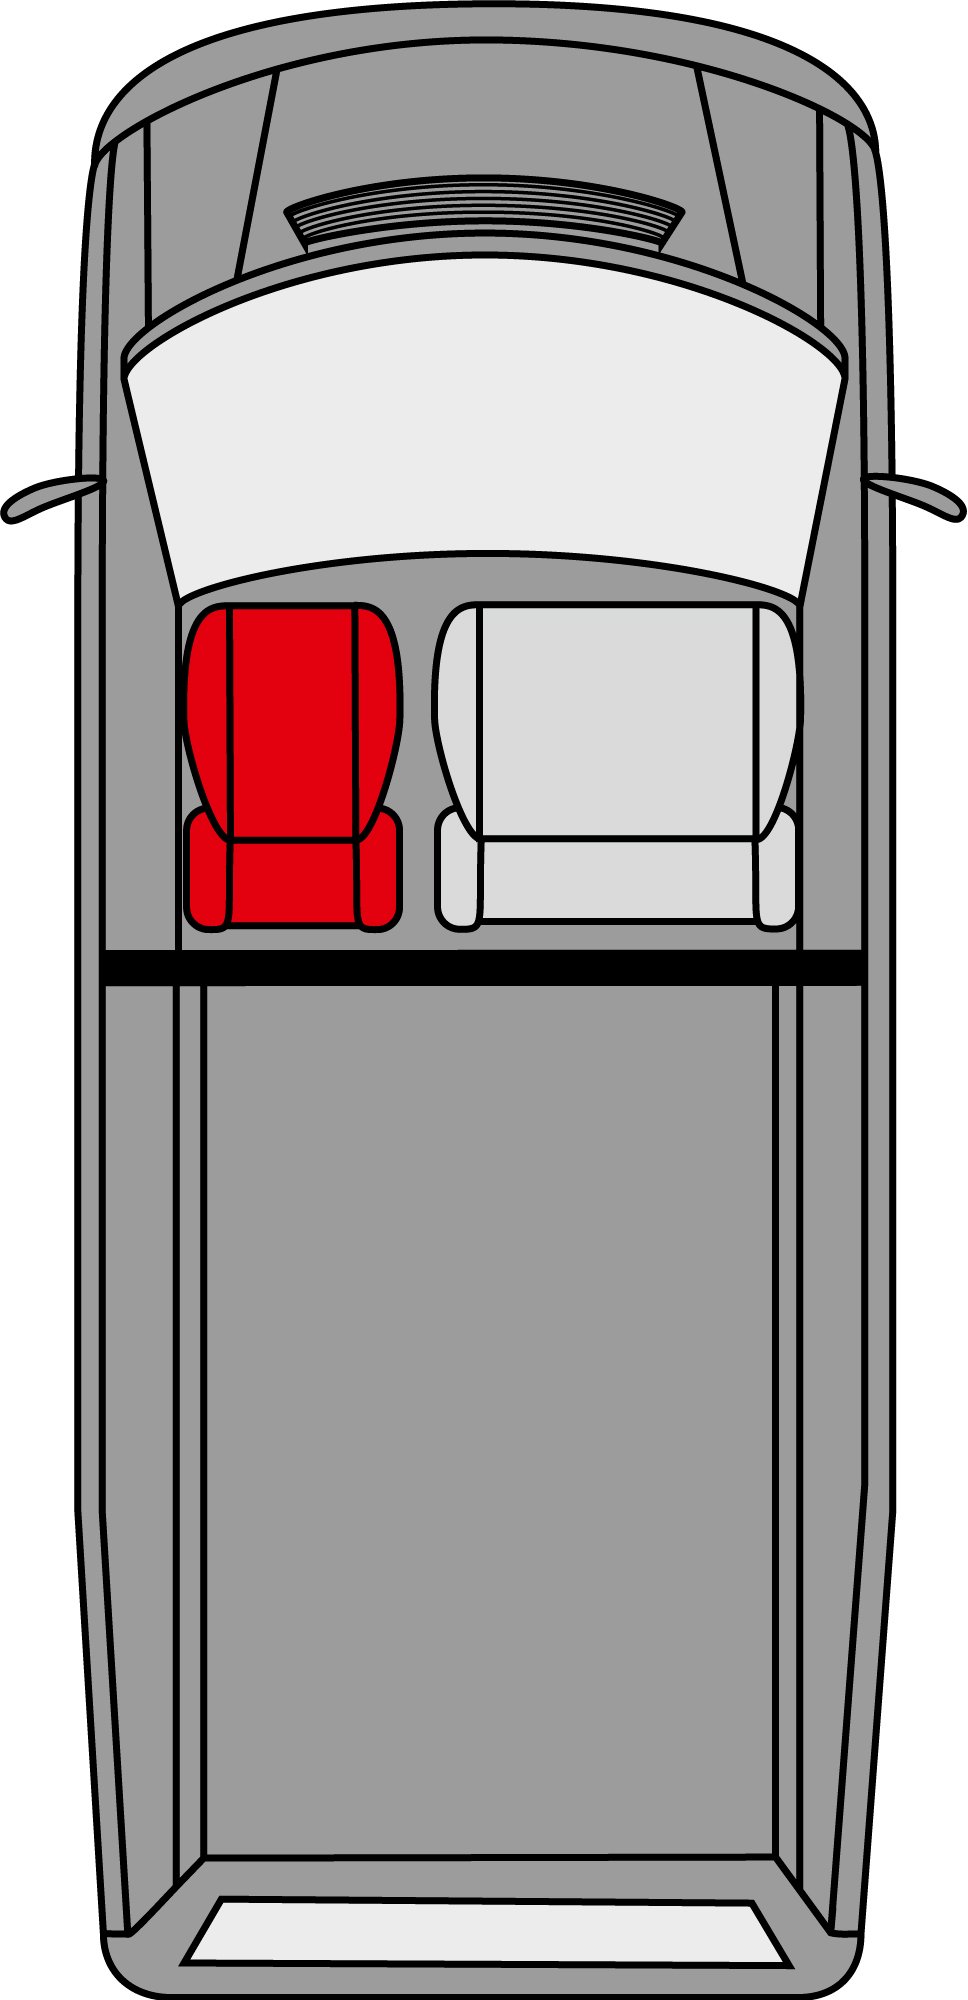 Housse de siège Transporter en tissu pour Ford Transit, siège avant simple